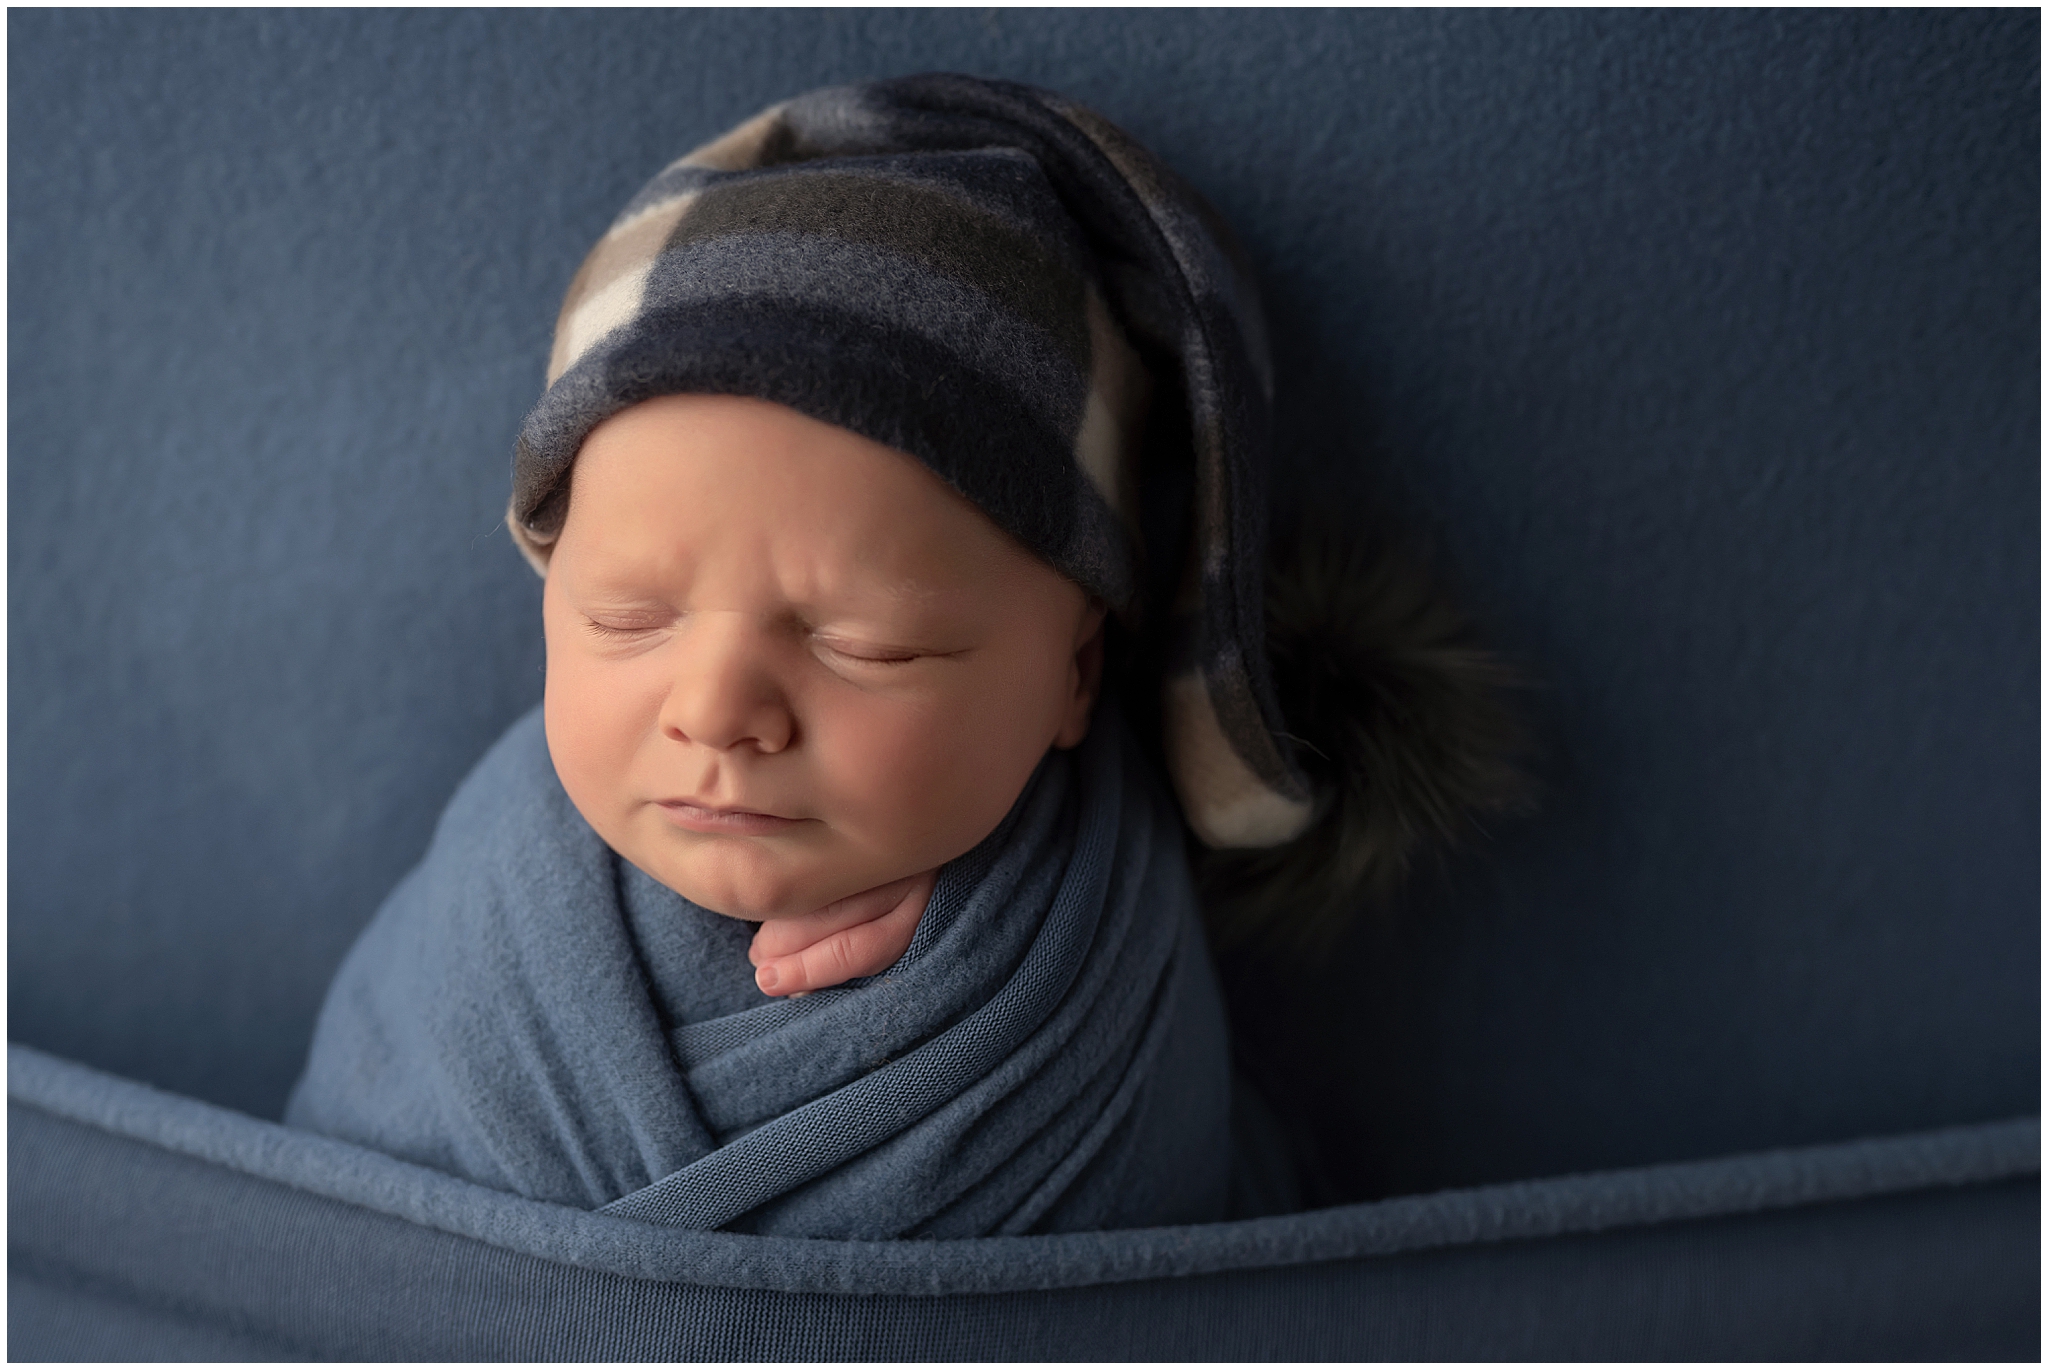 newborn baby dressed in blue